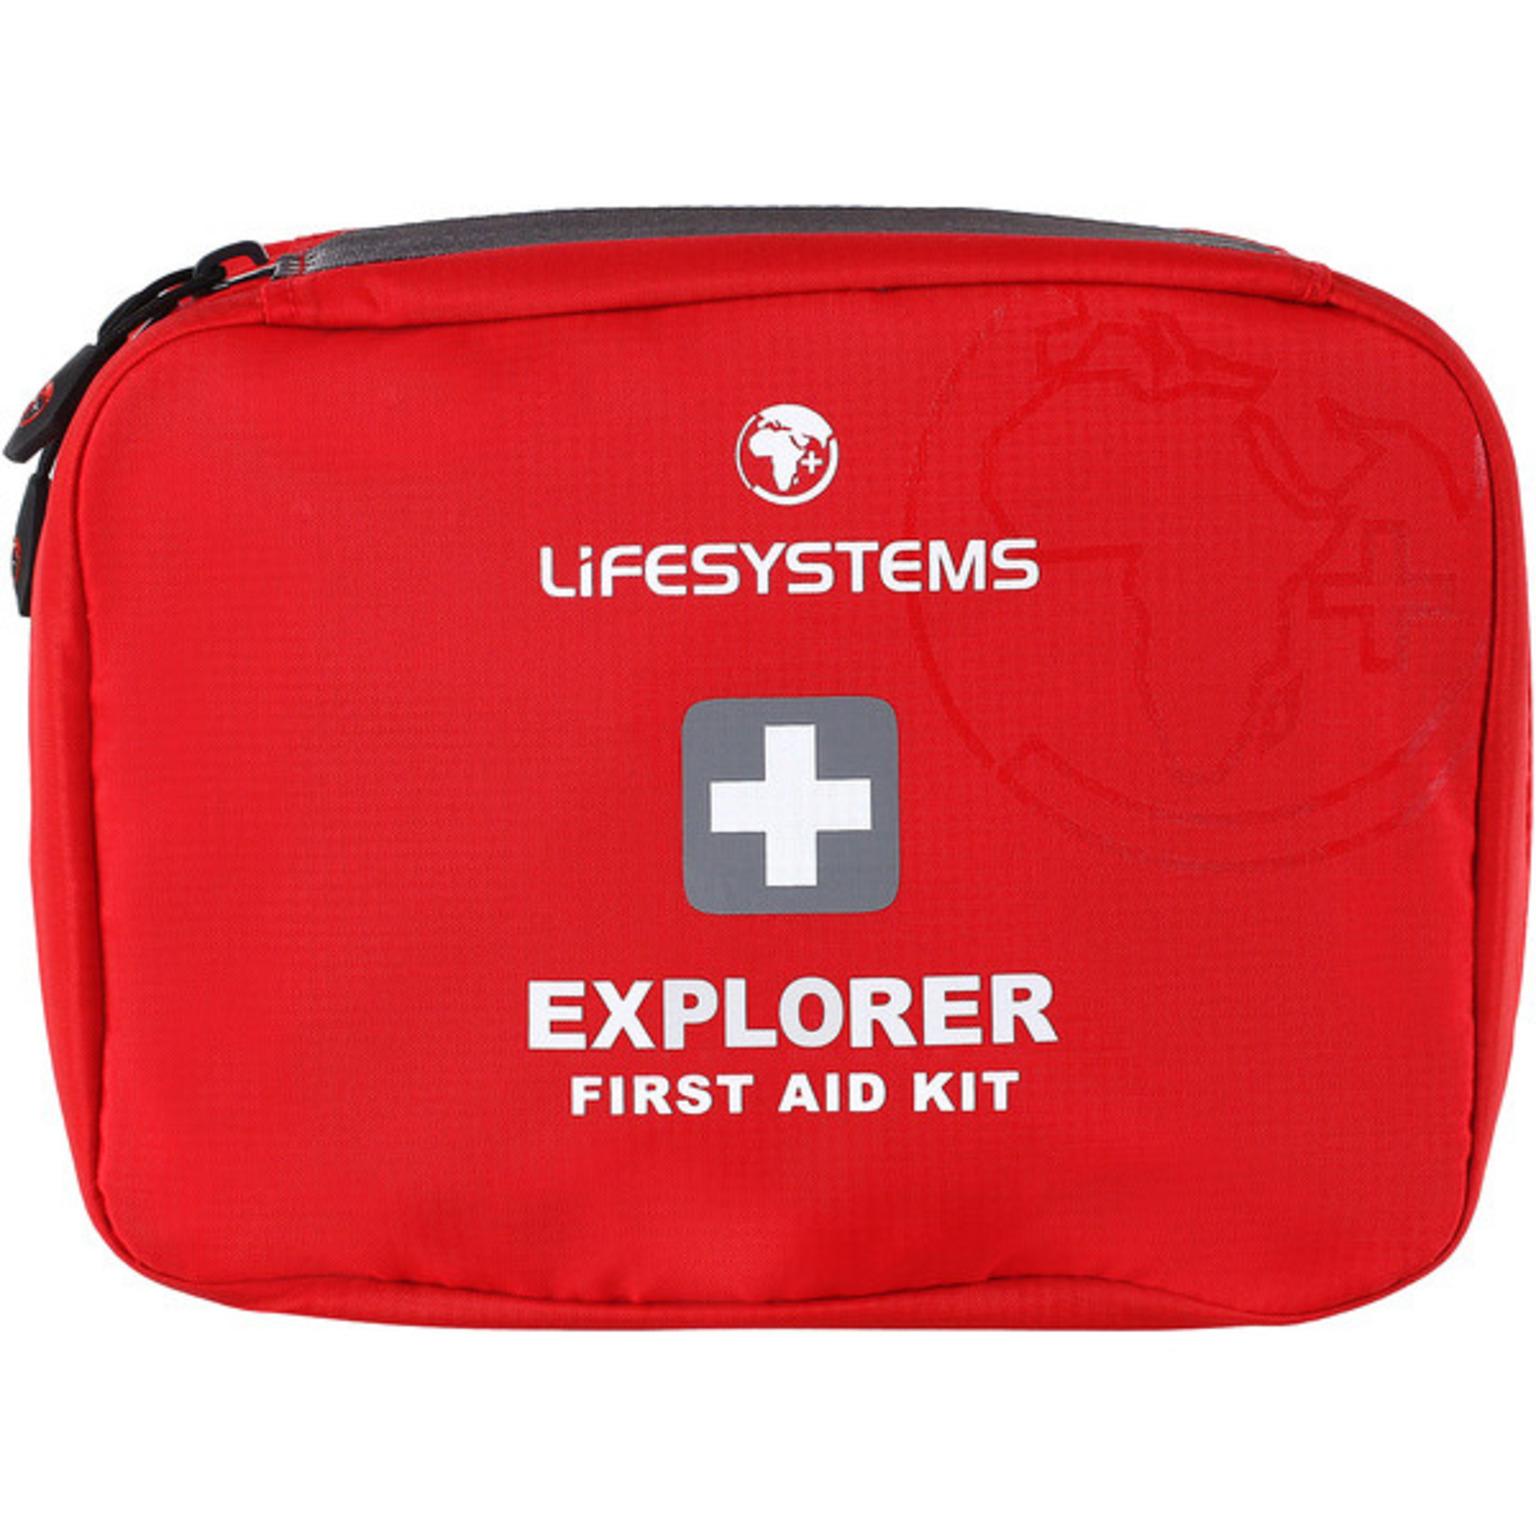 Lifesystems Explorer First Ait Kit